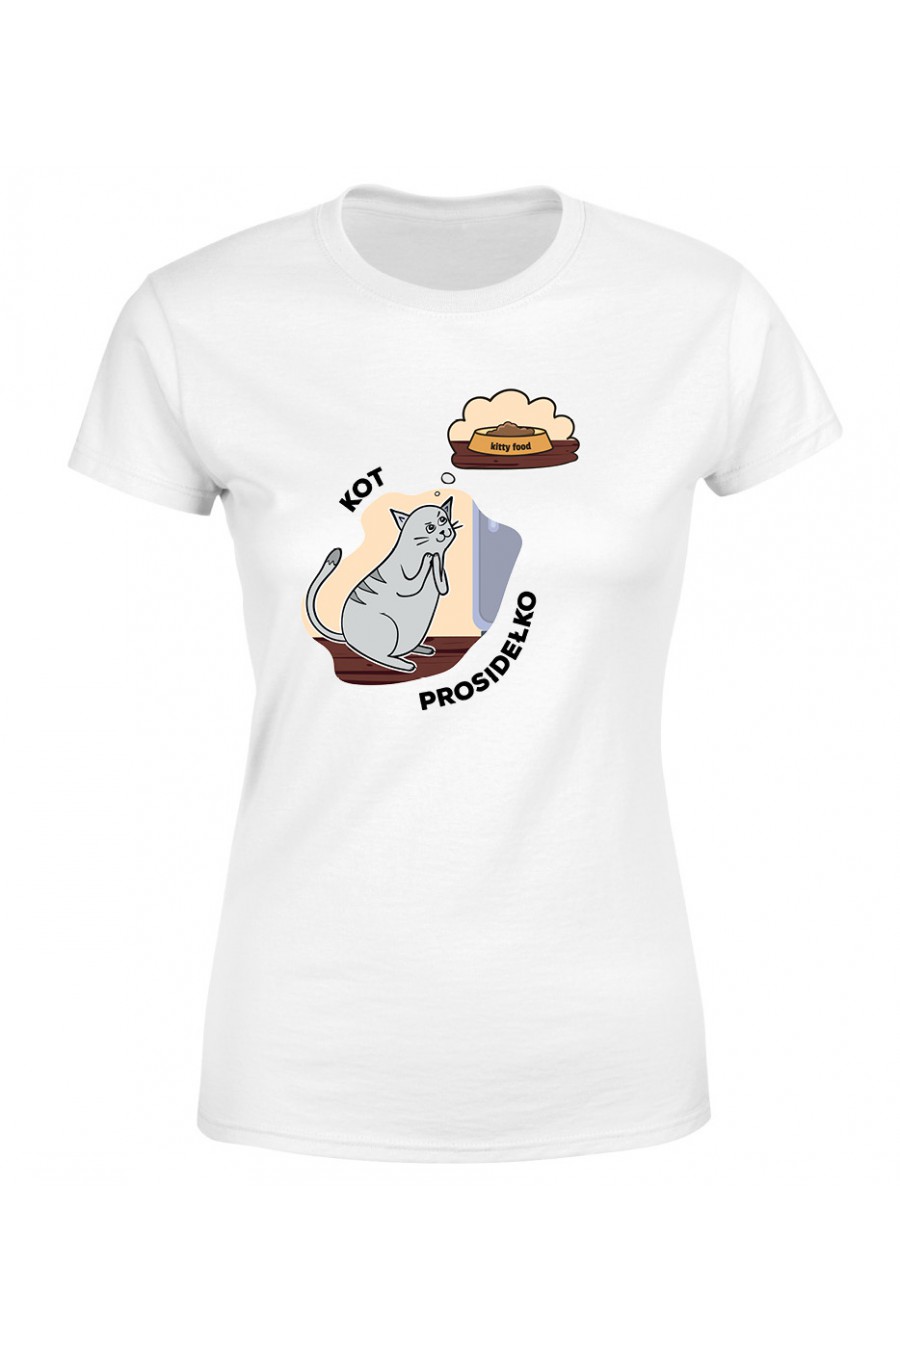 Koszulka Damska Kot Prosidełko